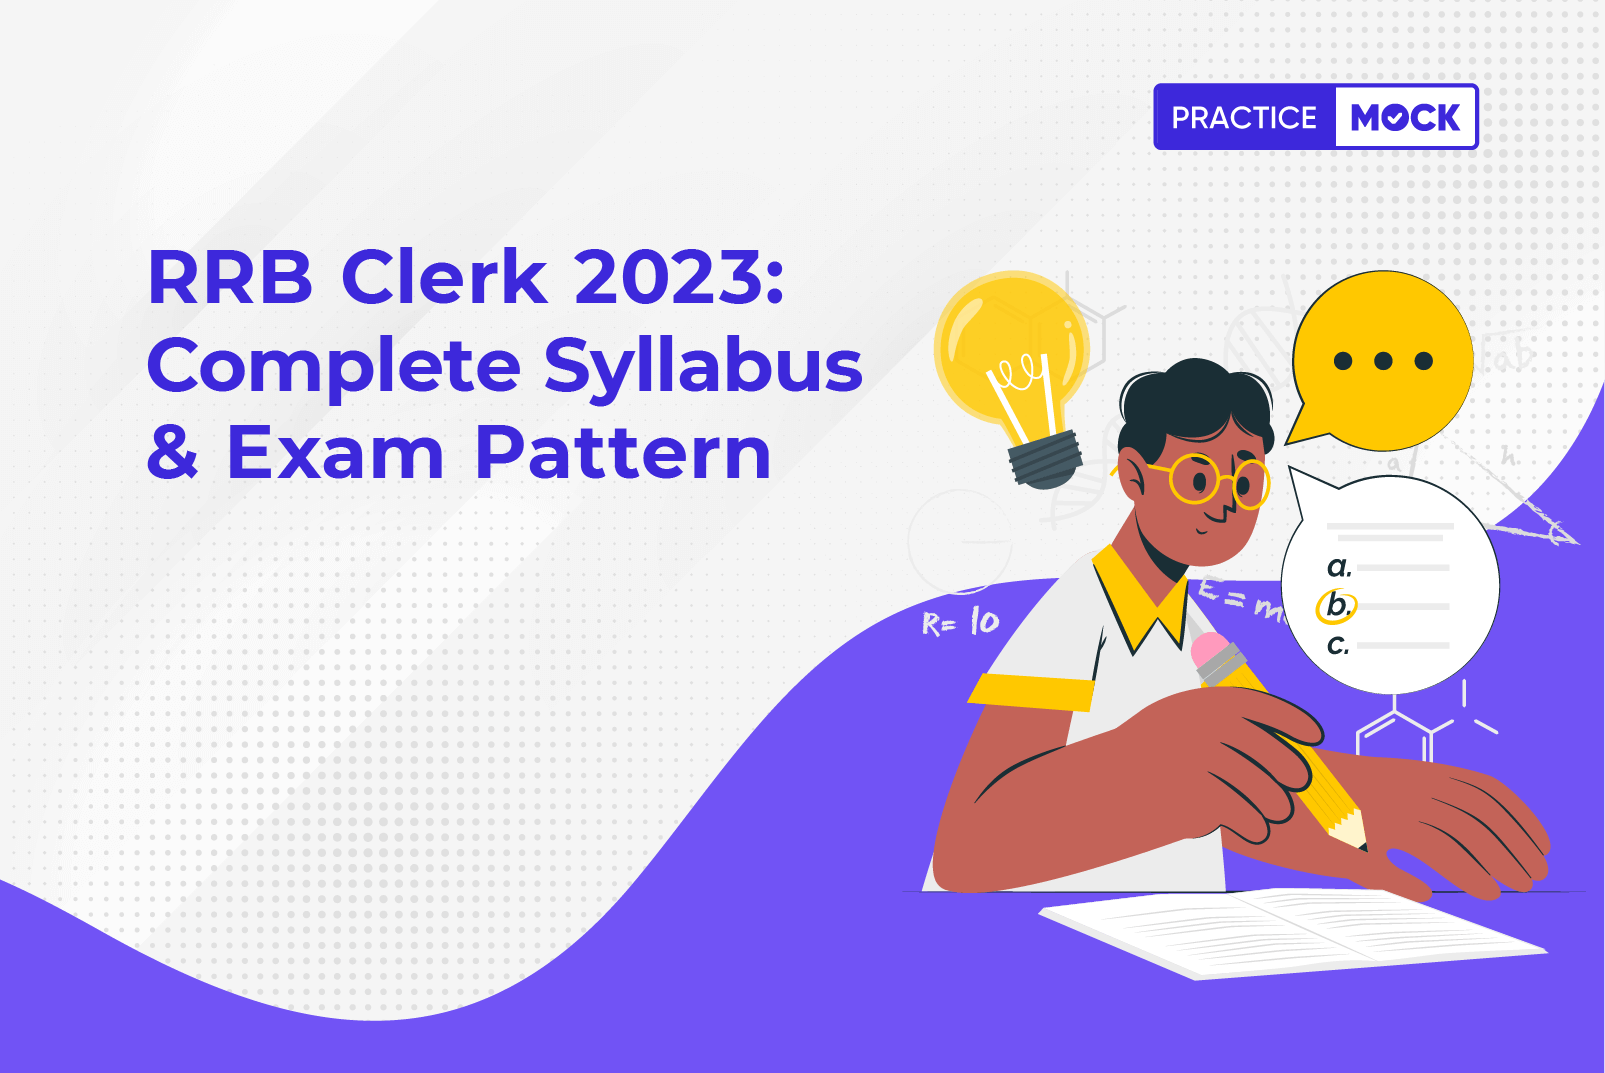 RRB Clerk 2023: Complete Syllabus & Exam Pattern